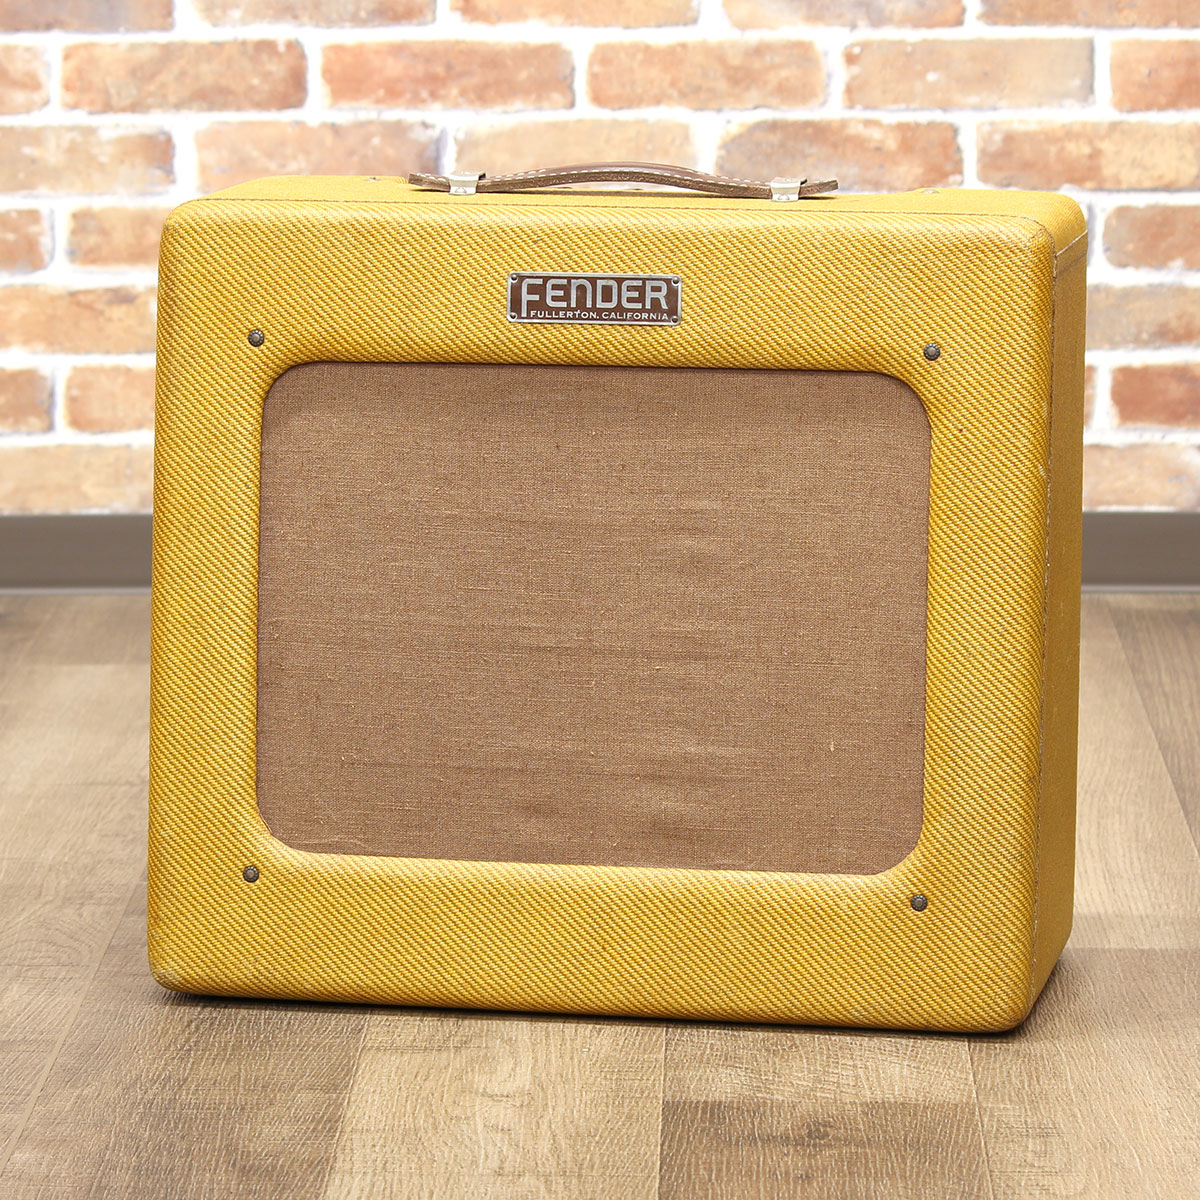 1950 Fender Deluxe Amp ”TV Front” - 1.jpg